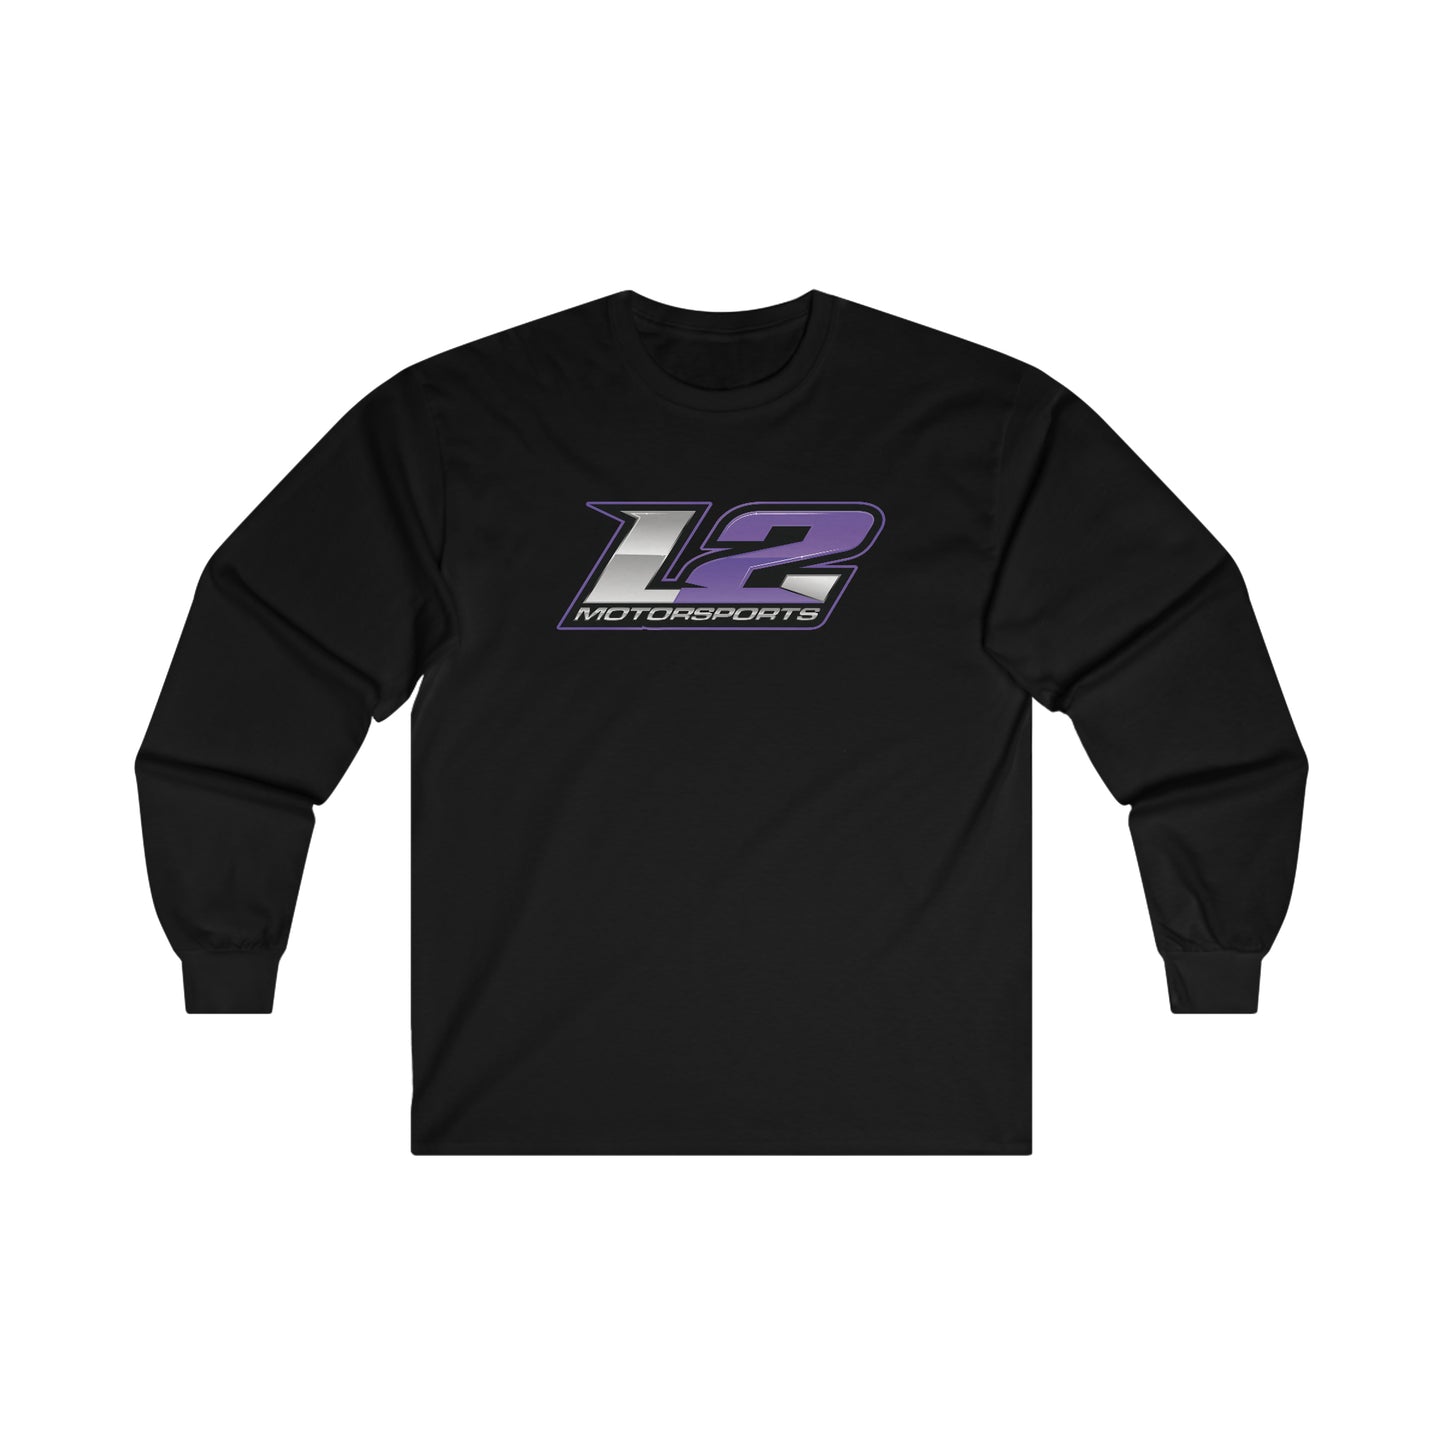 L2 Motorsports Team Long Sleeve Tee